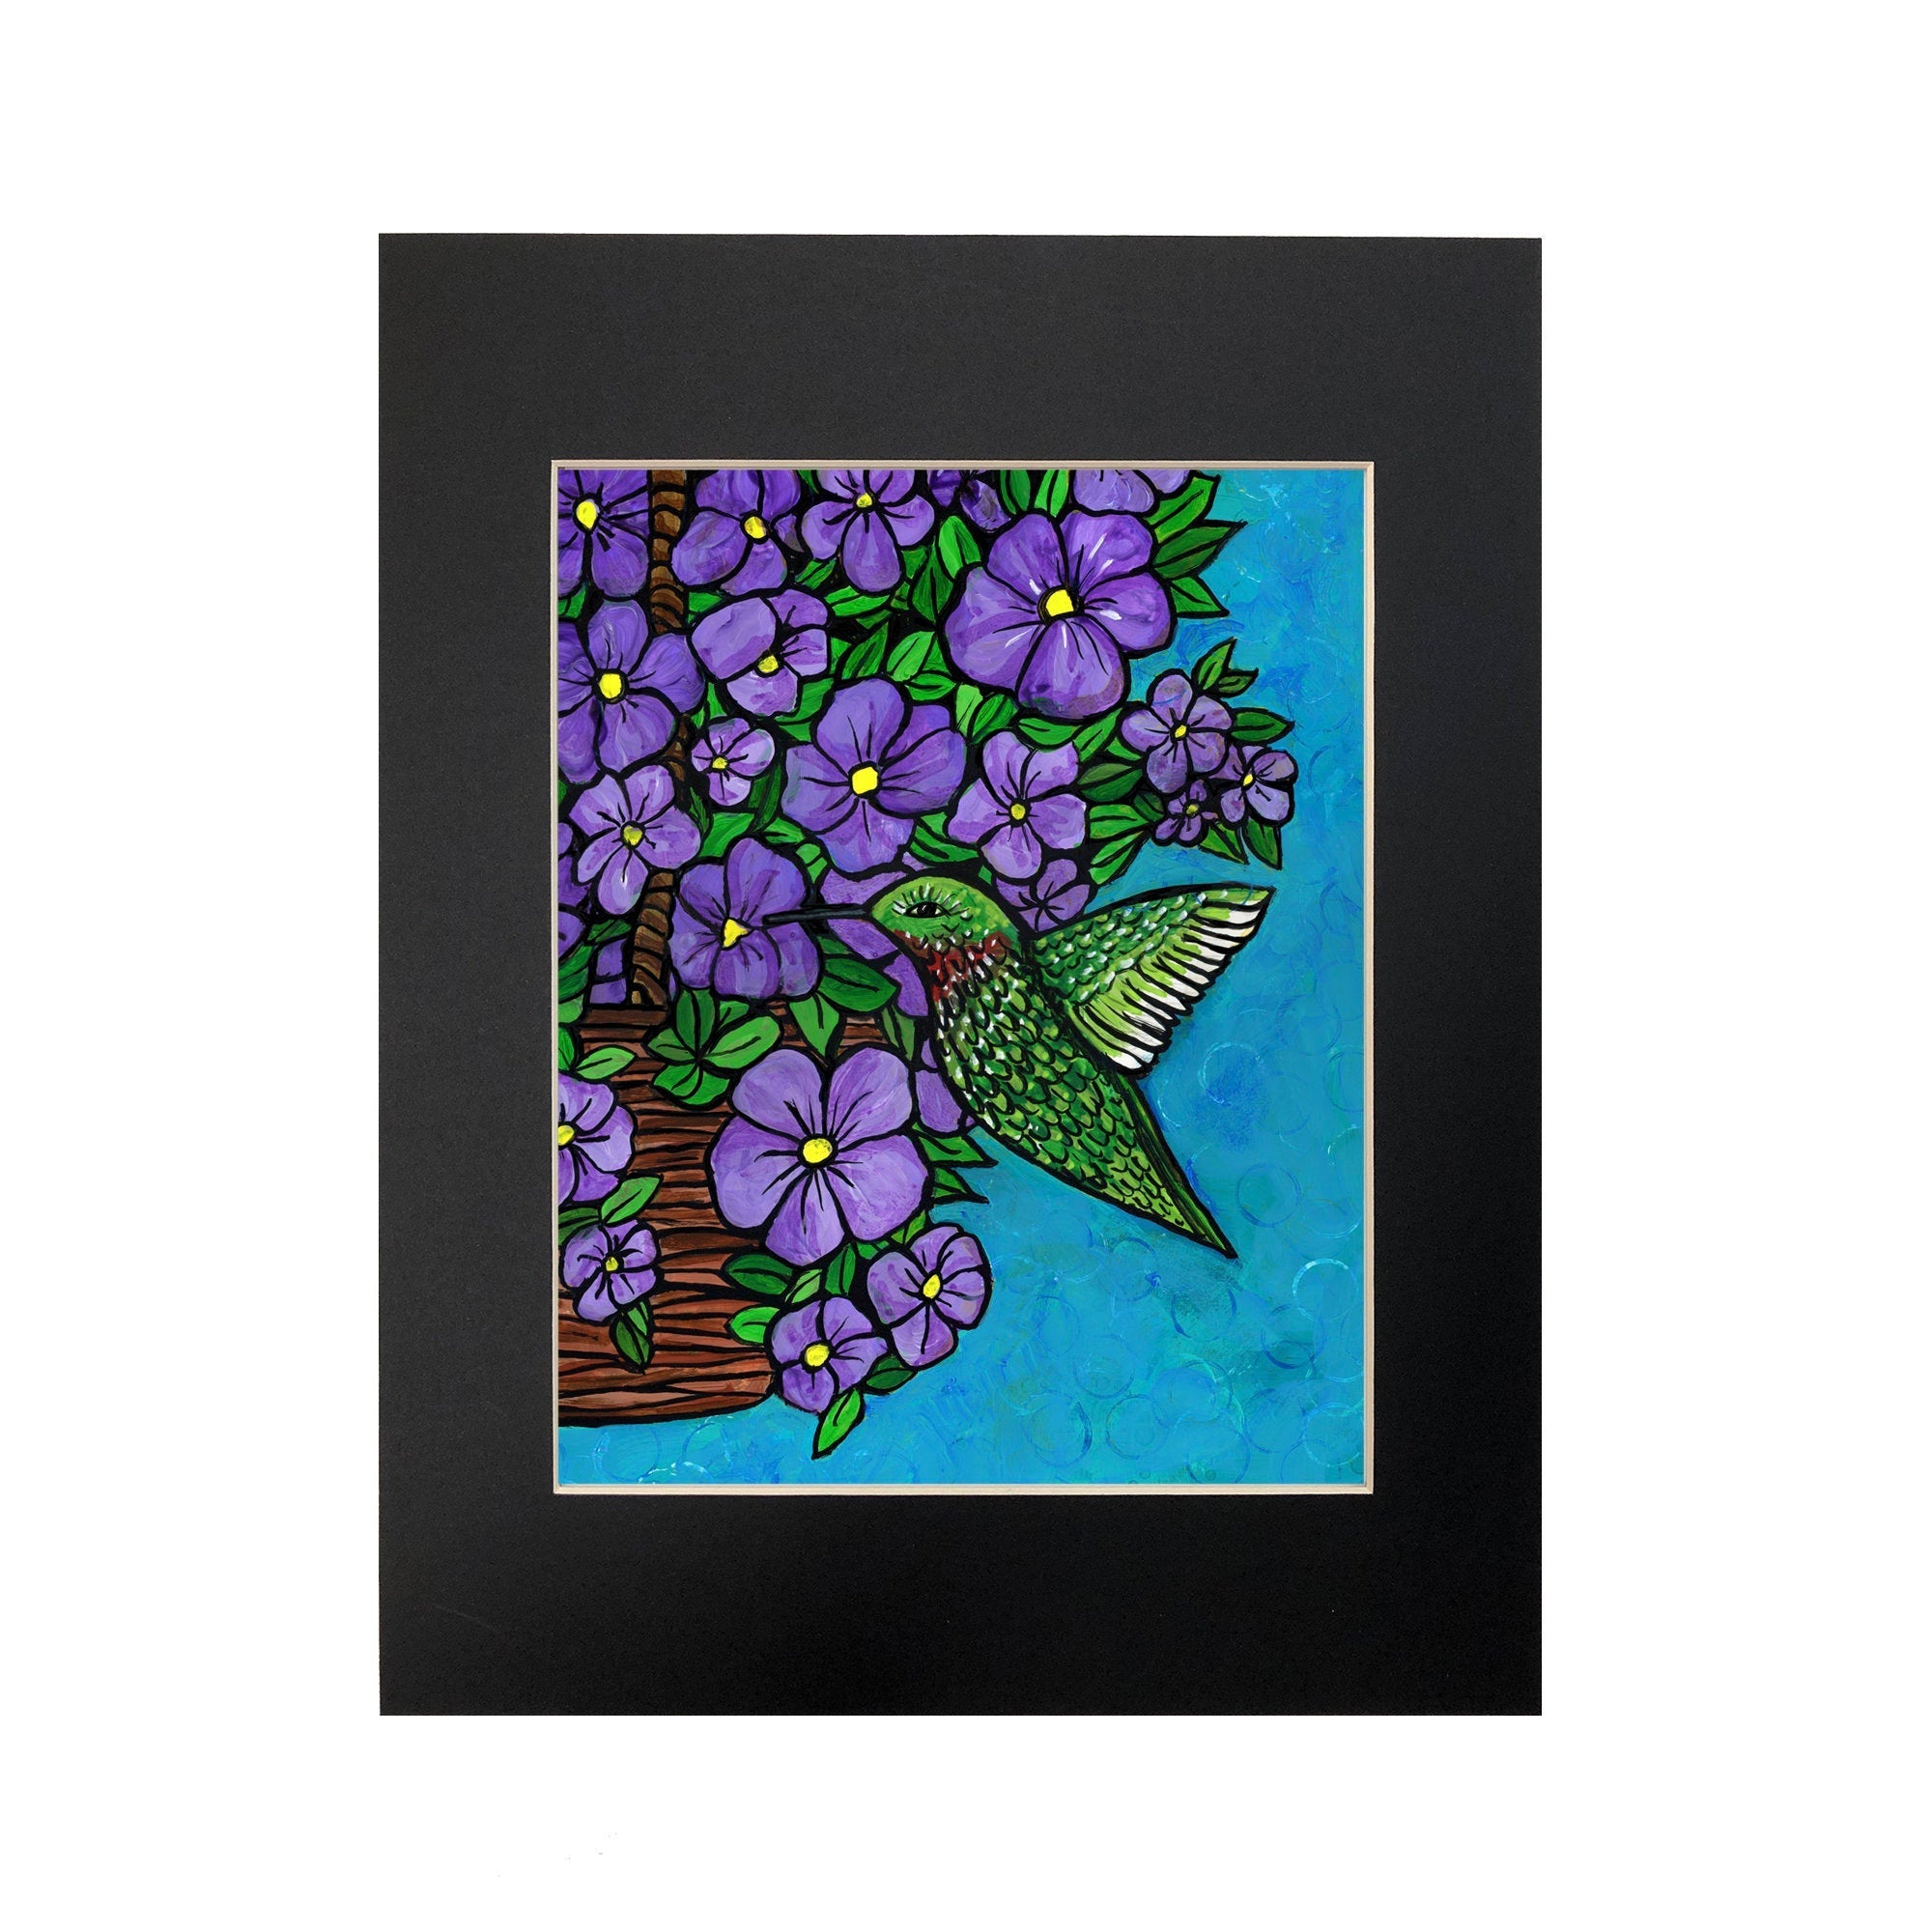 Hummingbird Art Print - Green Humming Bird with Purple Petunia Flowers - 8x10 Colorful Bird Print with Optional Black Mat - Animal Art